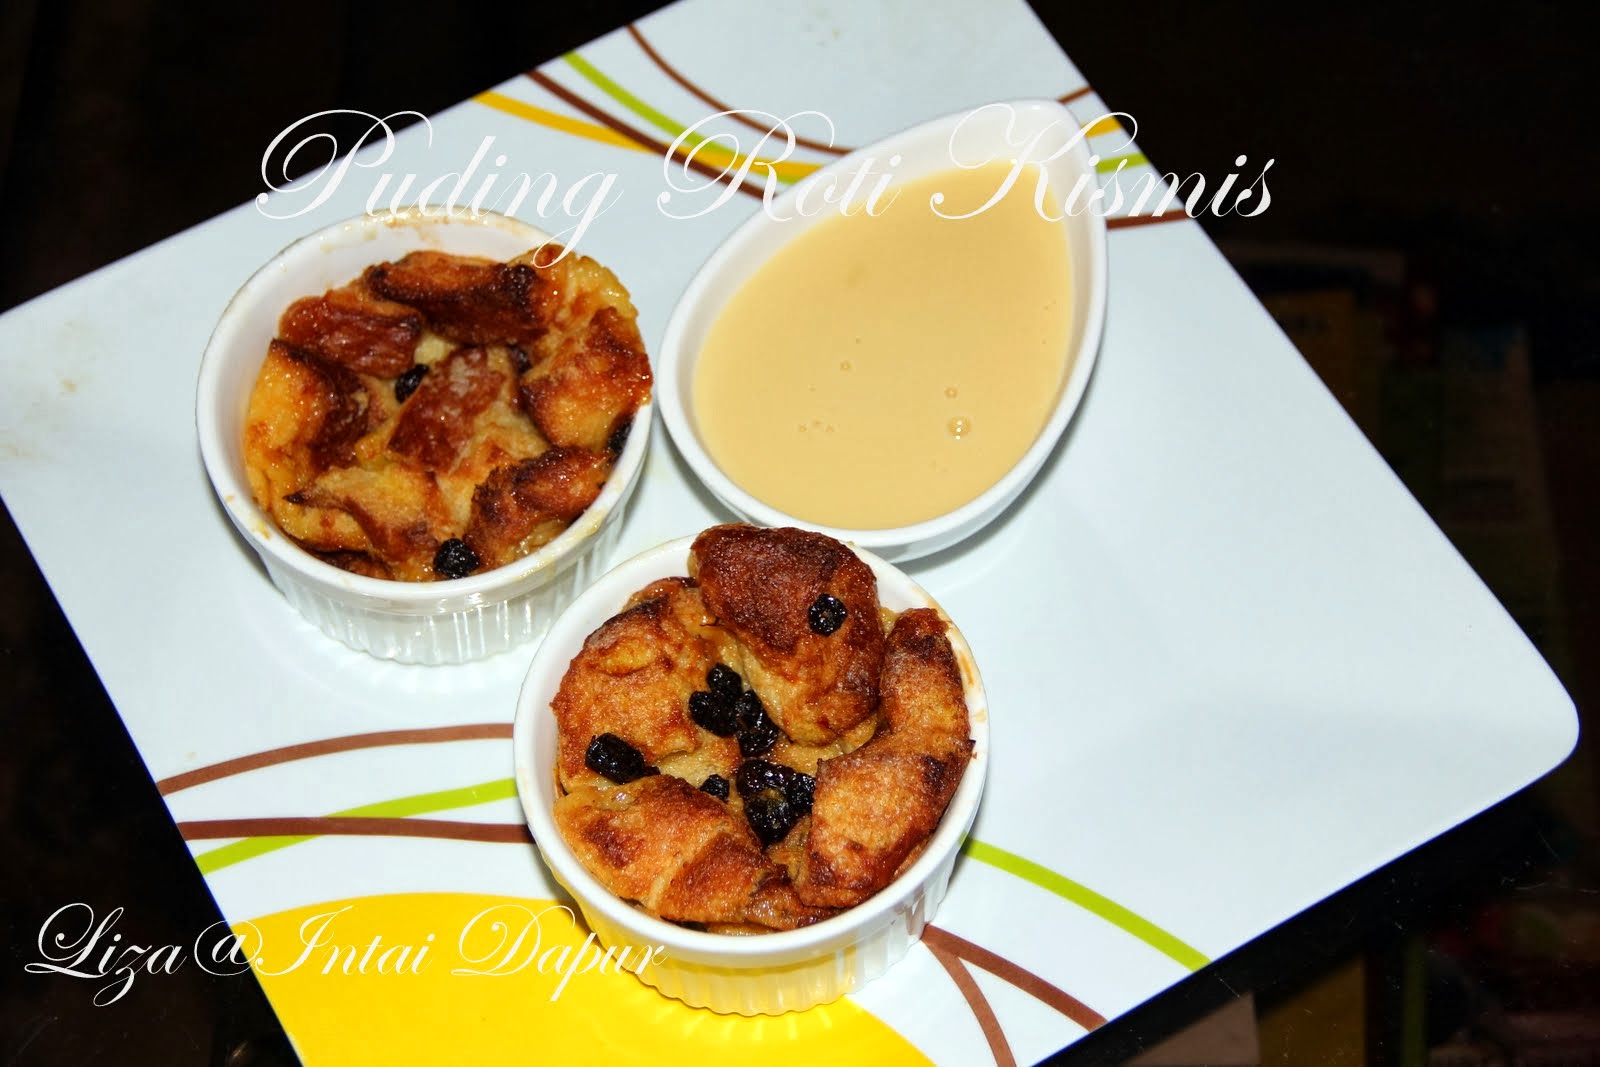 INTAI DAPUR: Puding Roti Kismis / Bread n Butter Pudding